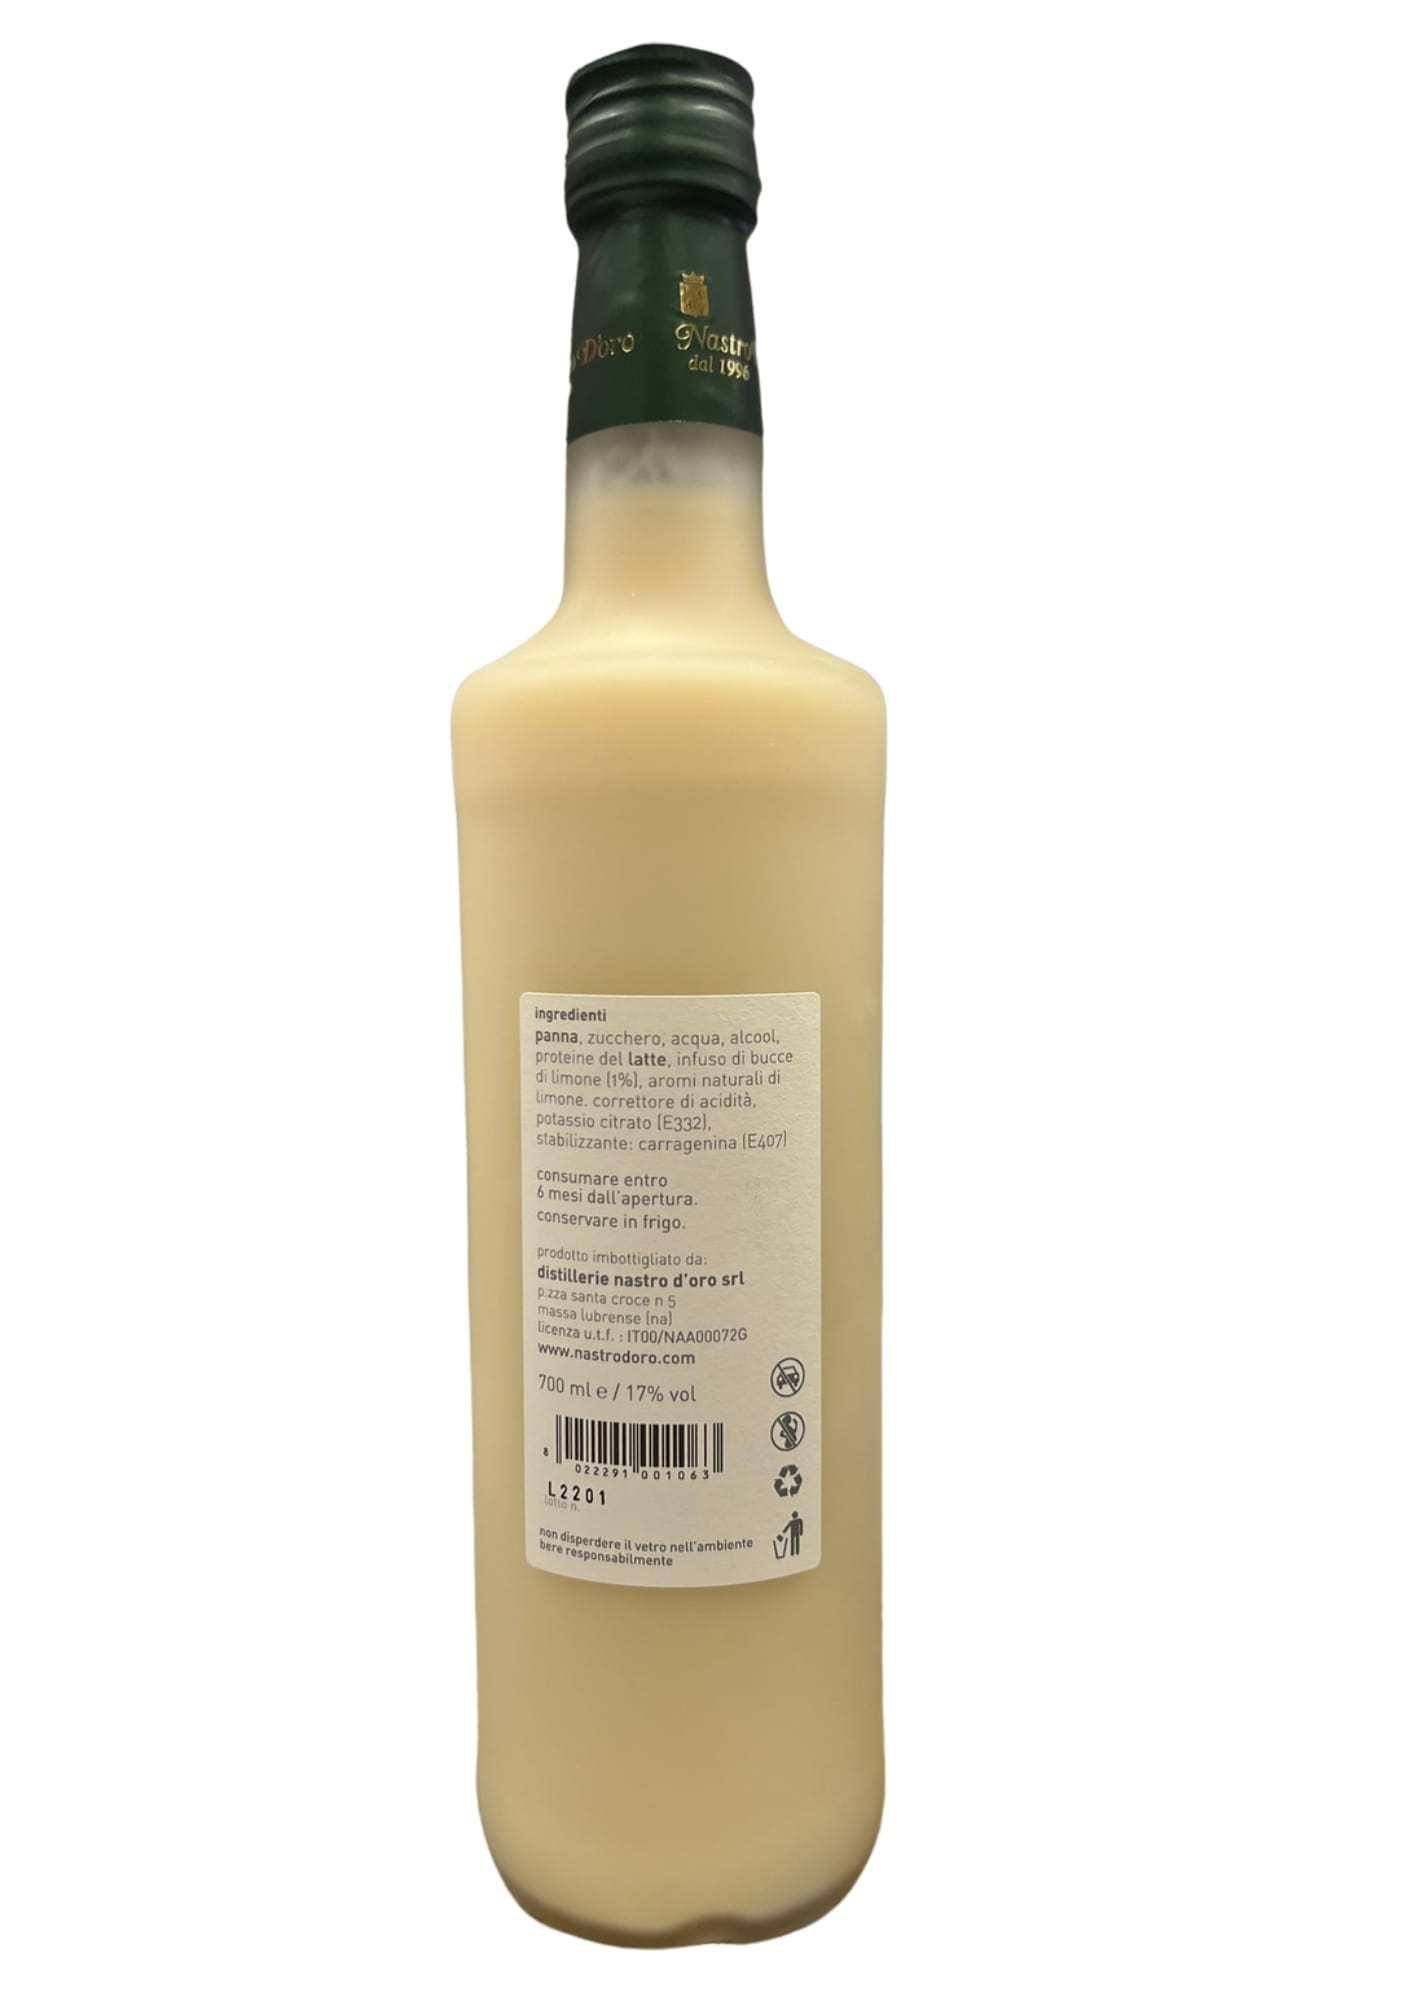 Nastro D'oro Crème de liqueur artisanal de citron  